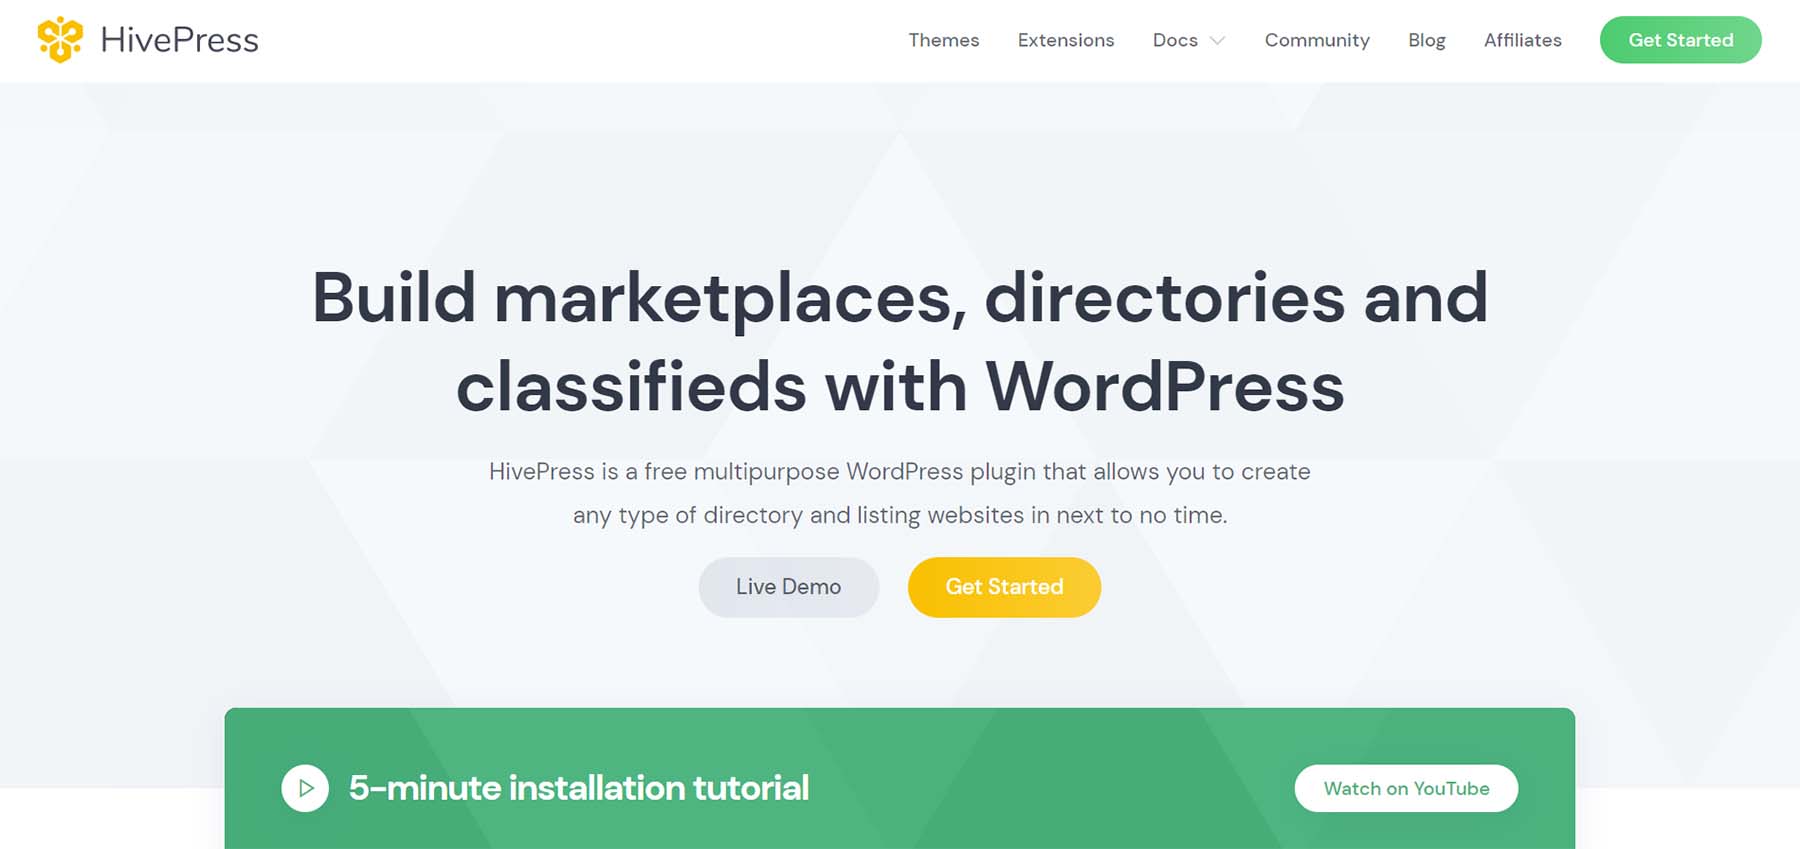 HivePress Multipurpose WordPress plugin